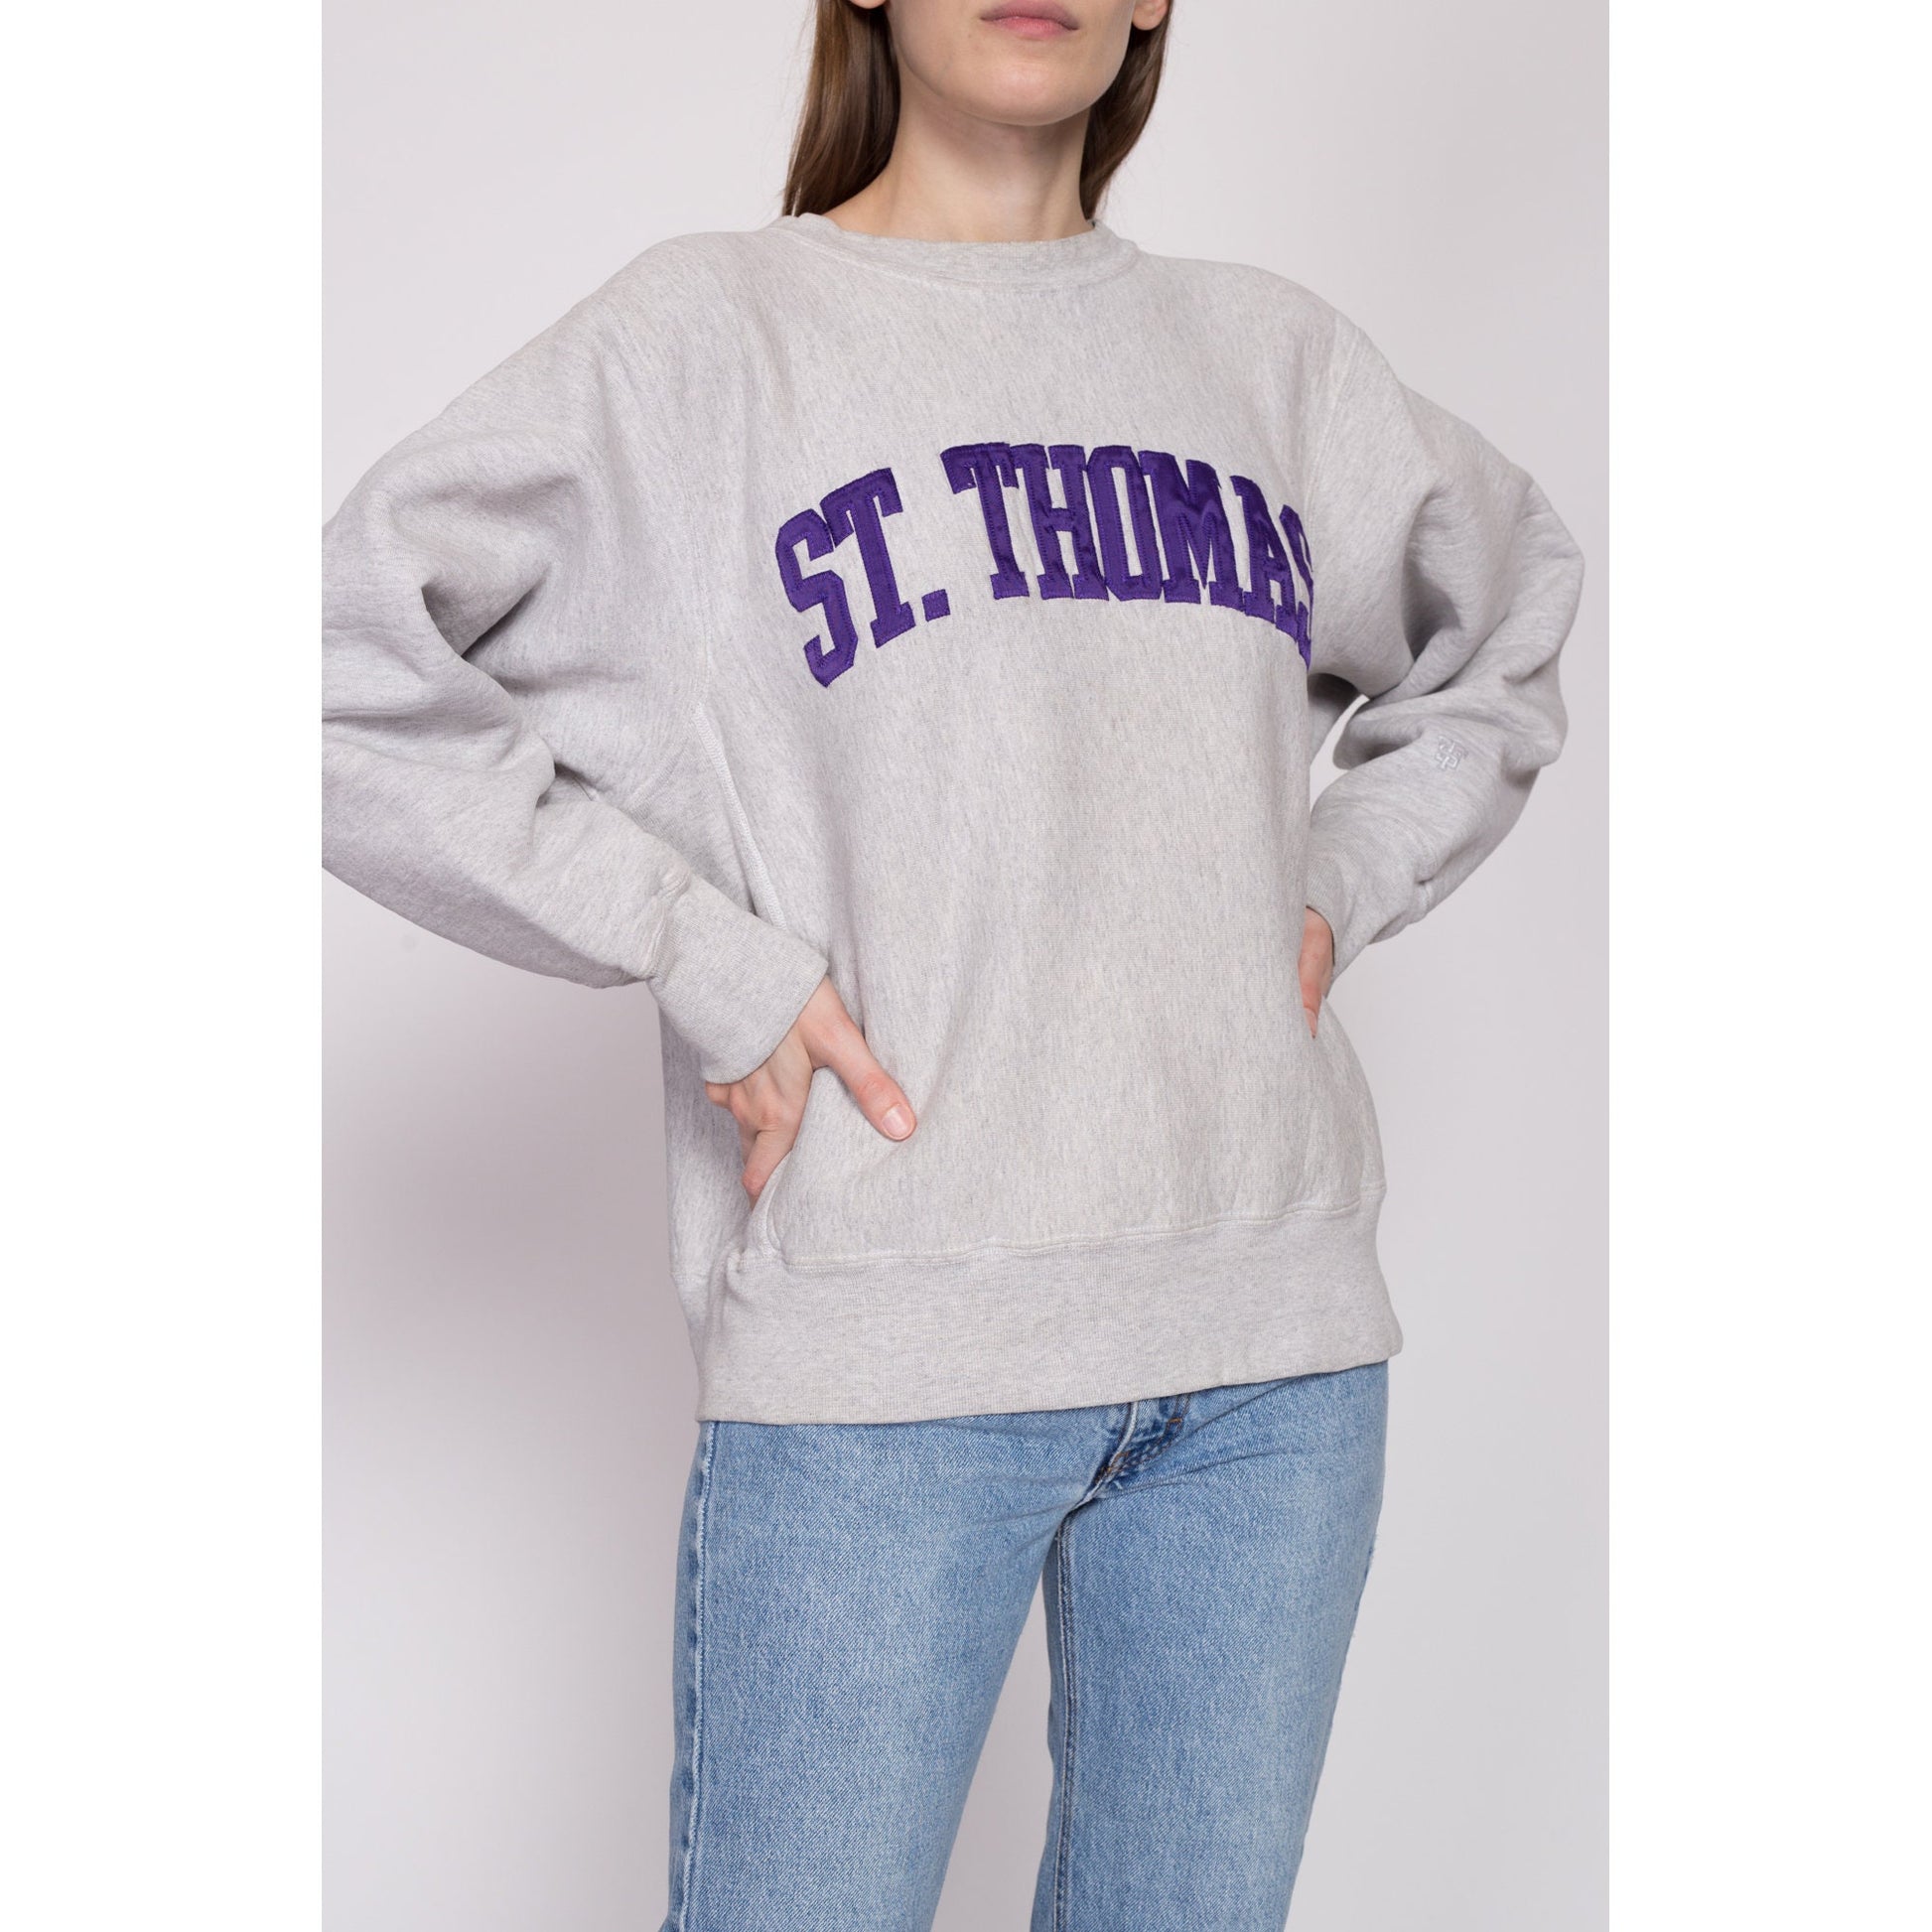 S-L| 90s St. Thomas Champion Reverse Weave Sweatshirt - Men's Small, Women's Medium to Large | Vintage Minnesota Crewneck Pullover